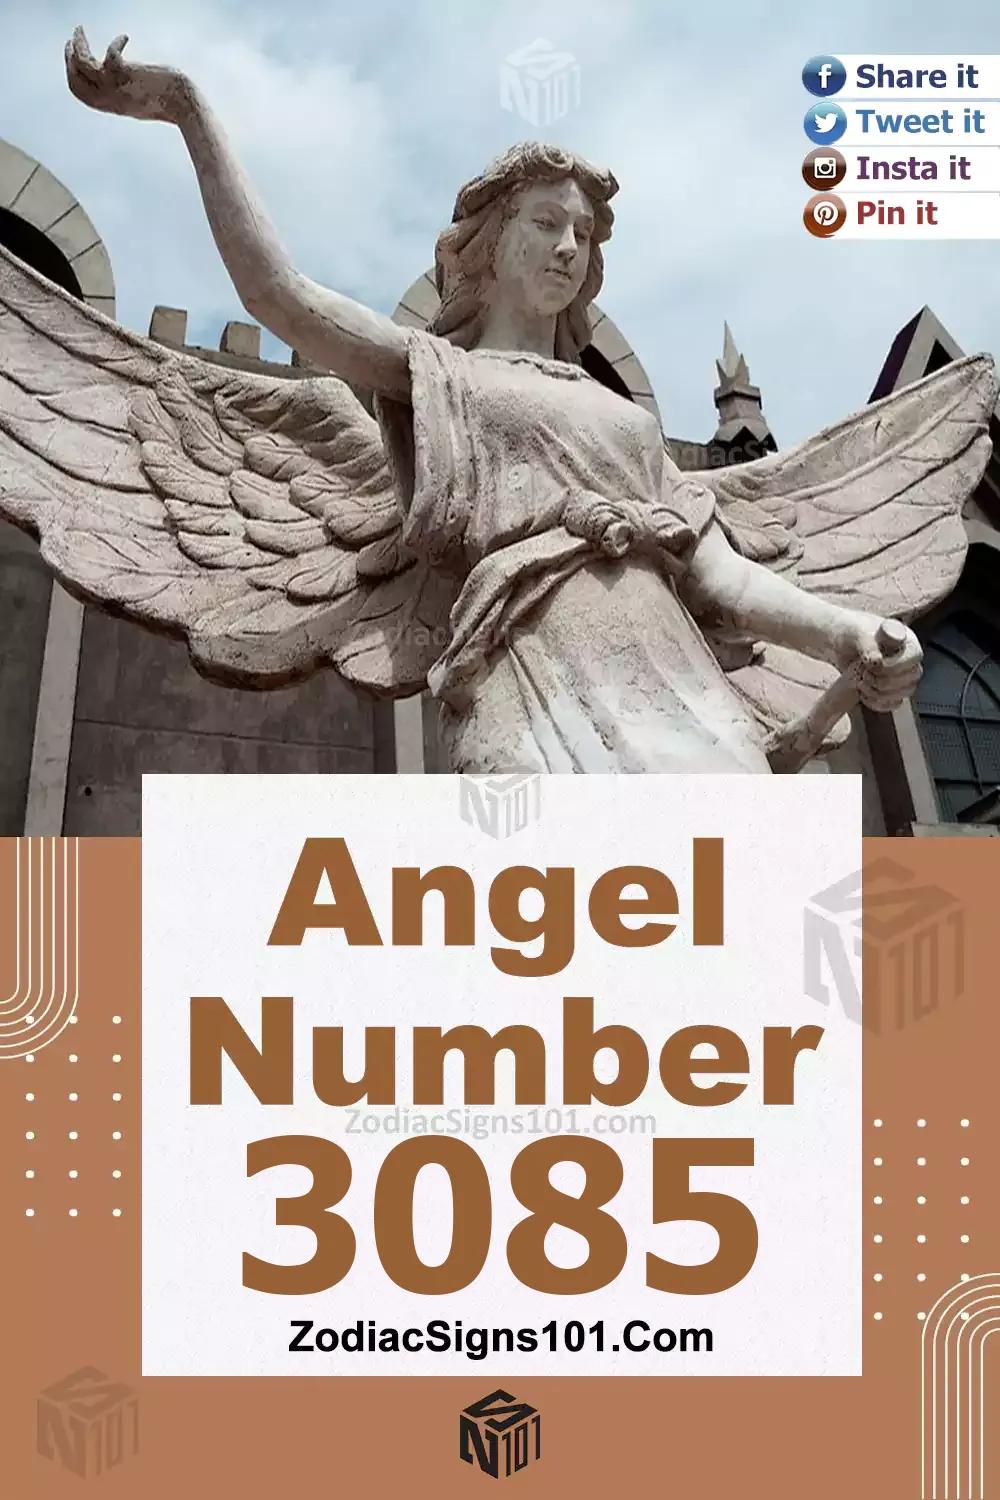 3085-Angel-Number-Meaning.jpg